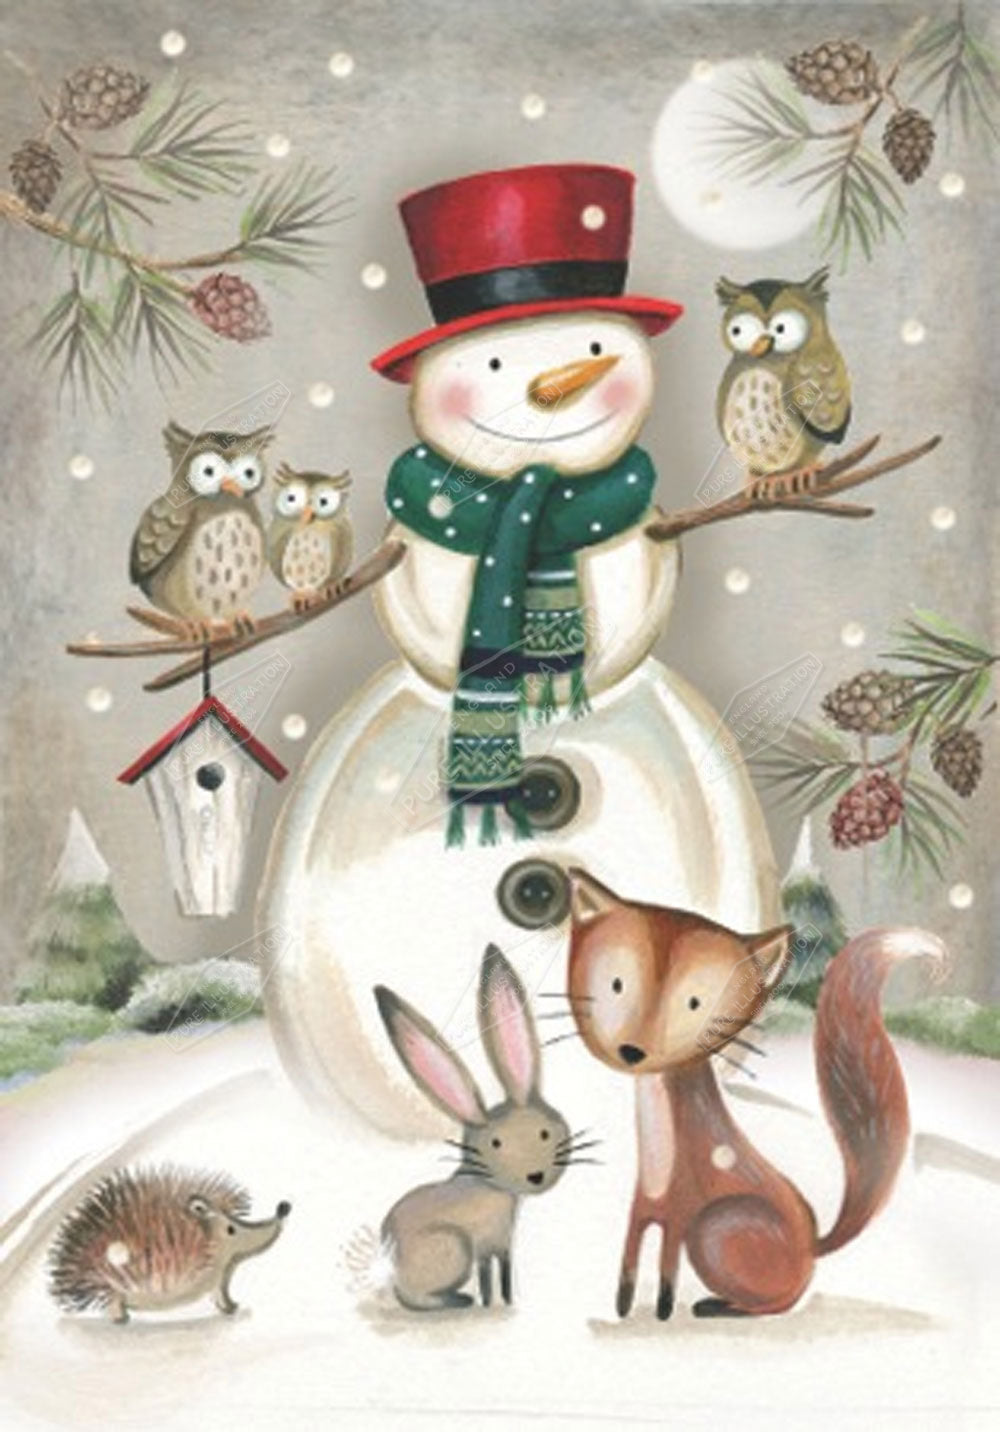 00023374DEV - Deva Evans is represented by Pure Art Licensing Agency - Christmas Greeting Card Design